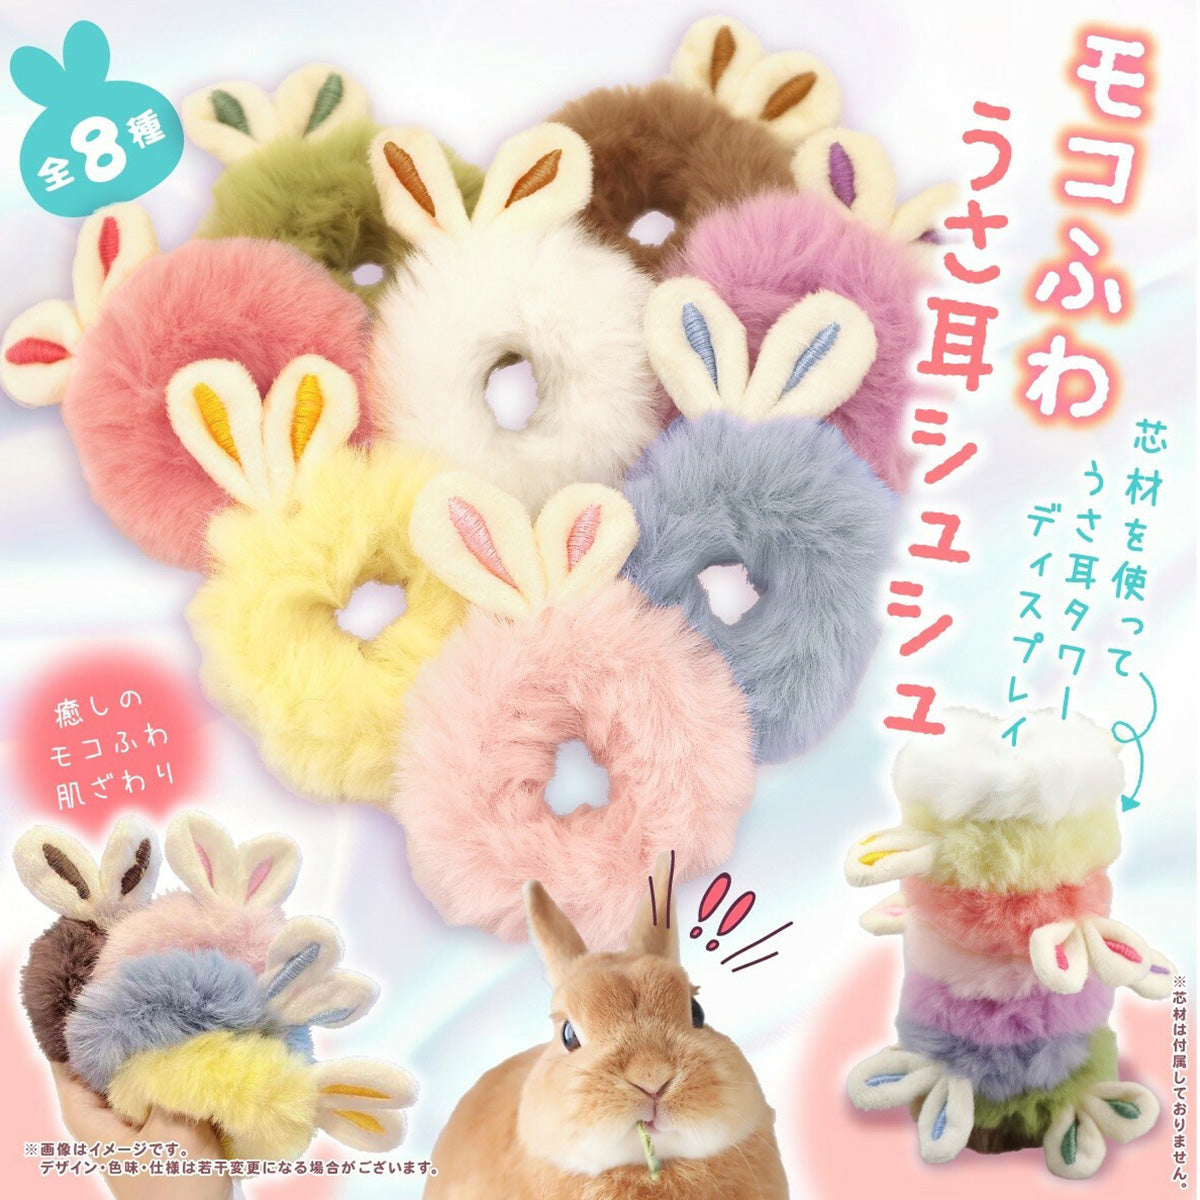 Scrunchie - Bunny Ears 8in1 (Japan Edition)